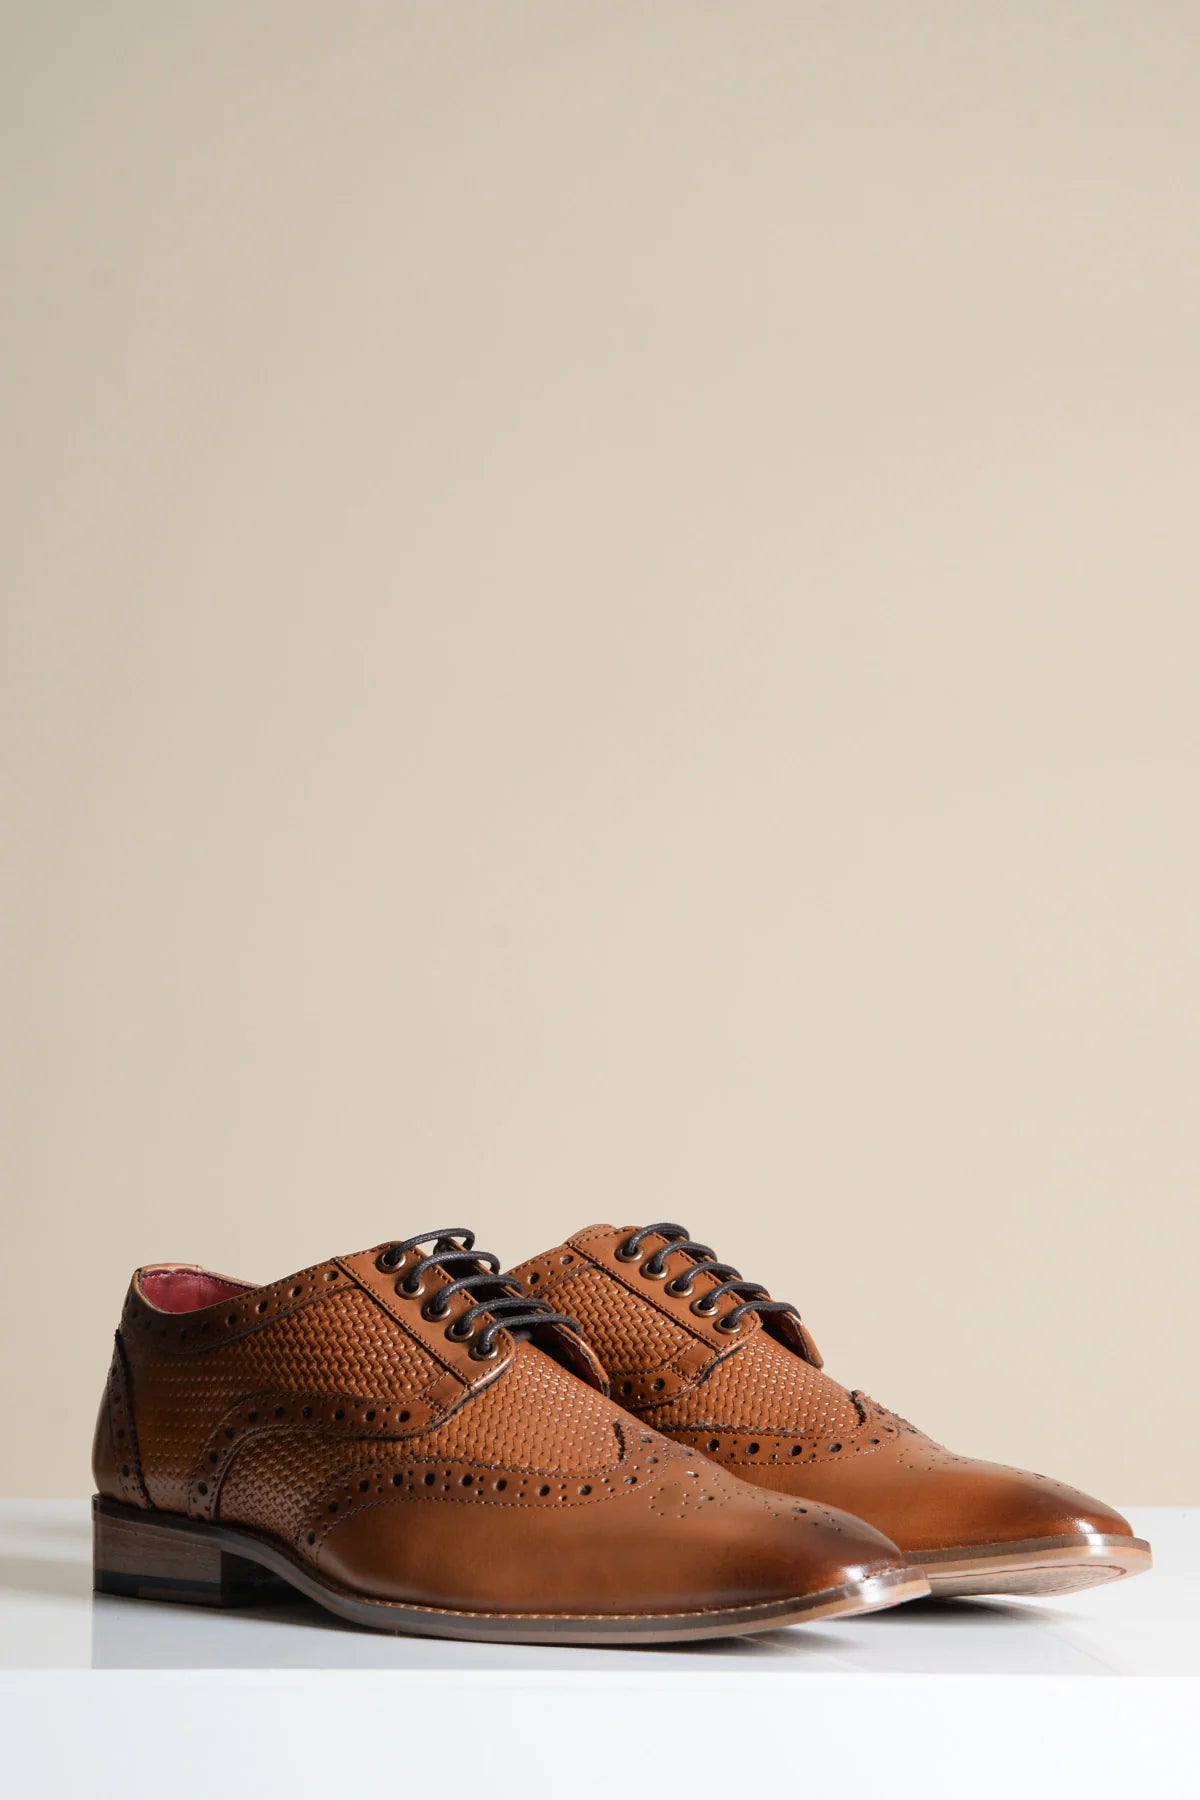 Brown leather shoes, Marc Darcy Brandon - Wingtip brogue